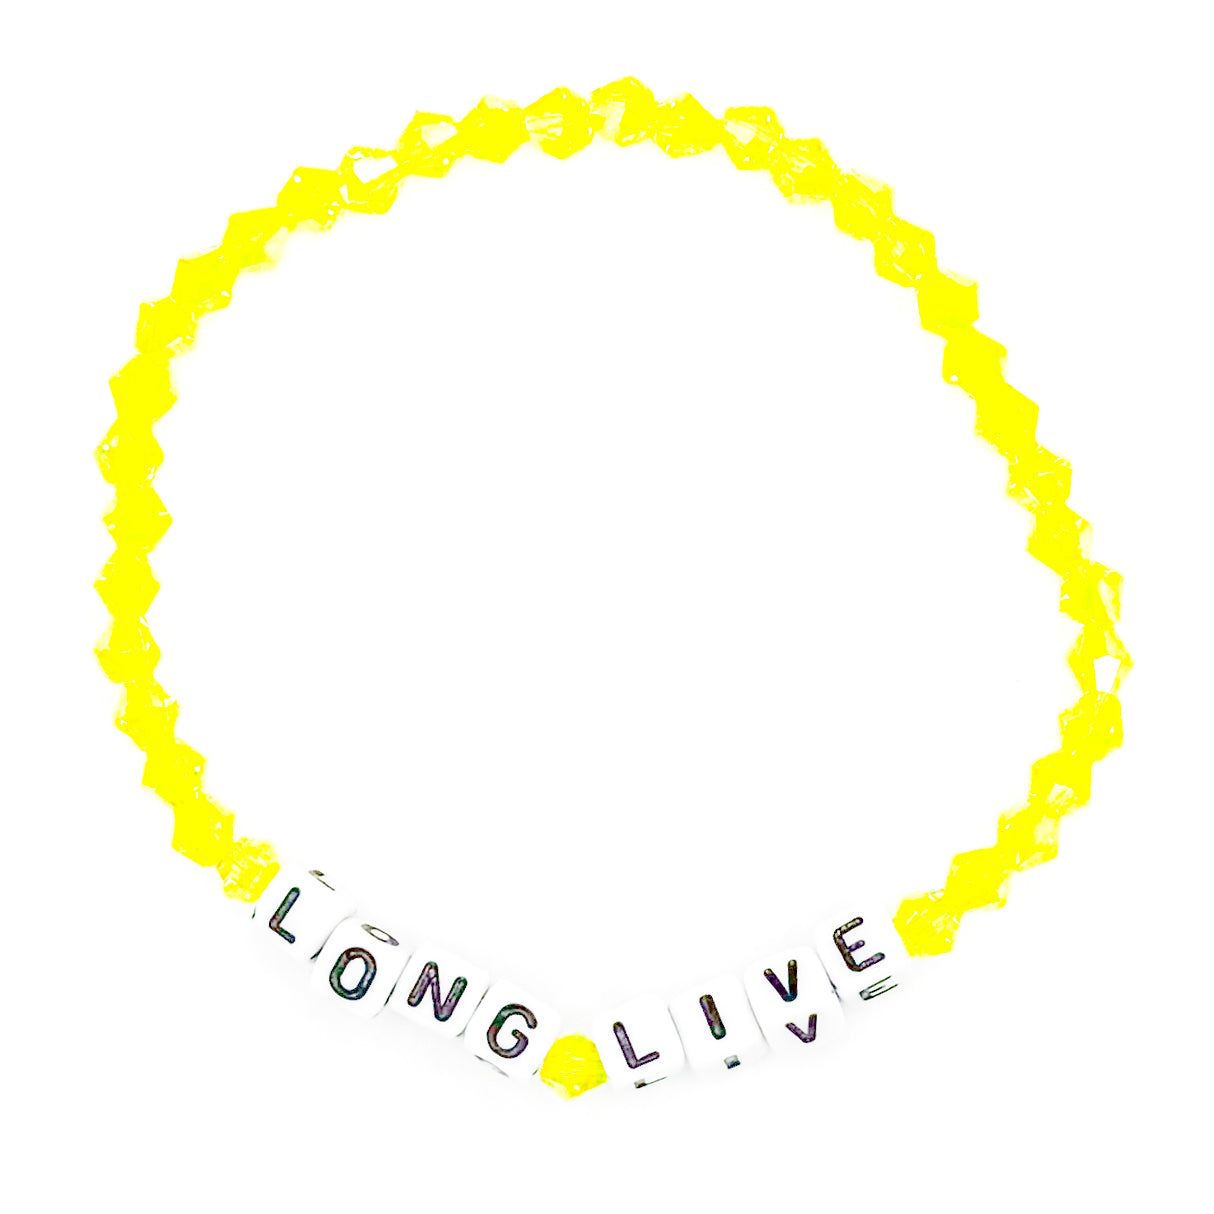 Yellow "Long Live" Bead Buddy Bracelet